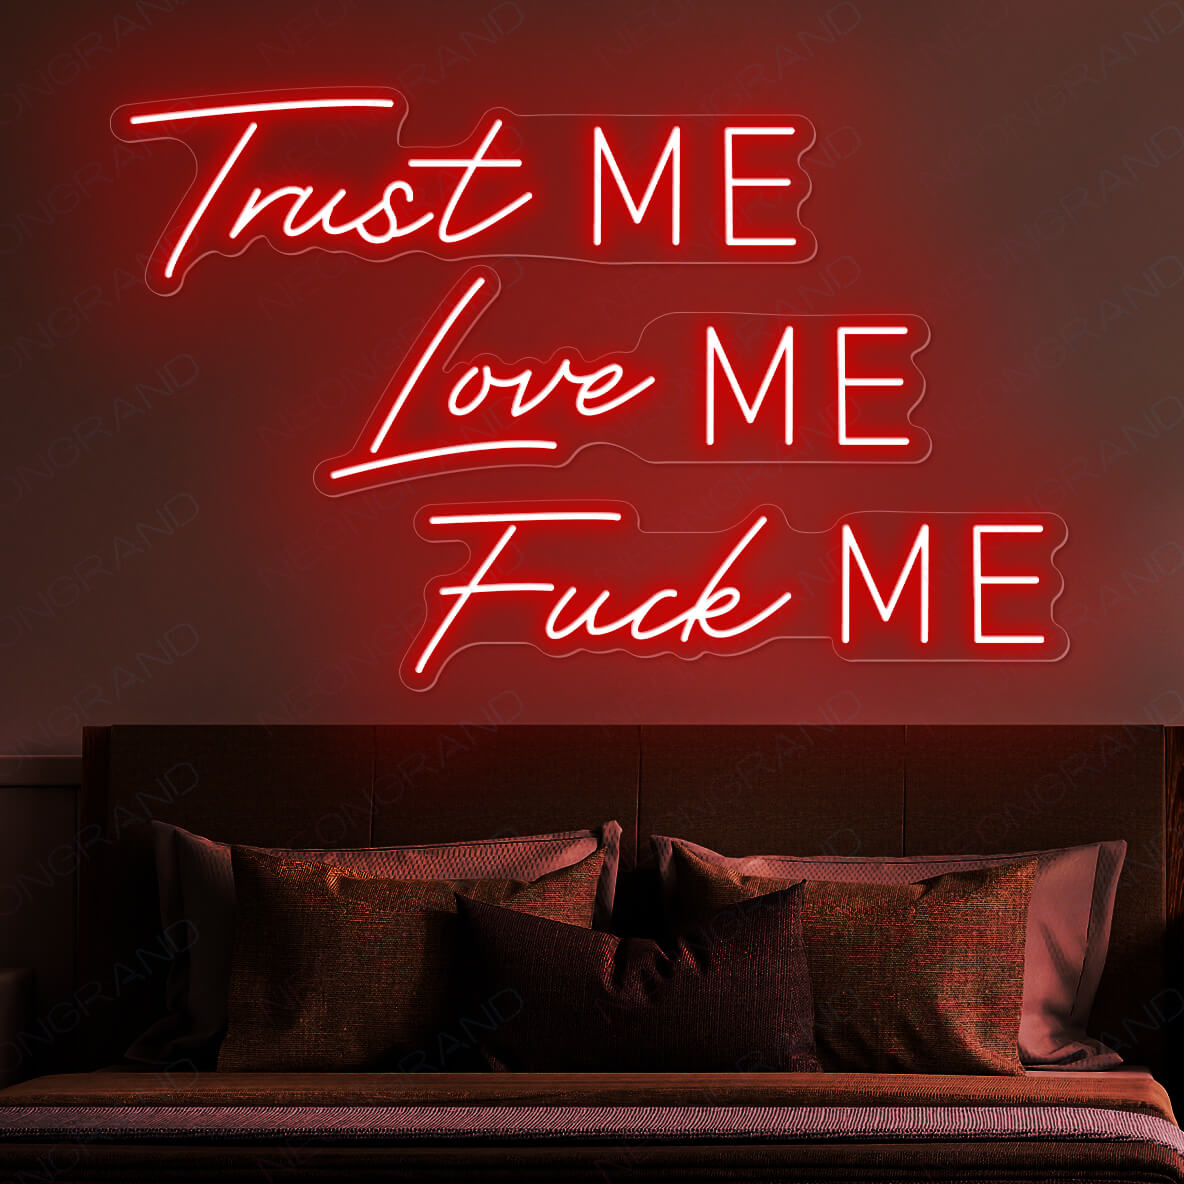 Trust Me Love Me Fuck Me Neon Sign red wm